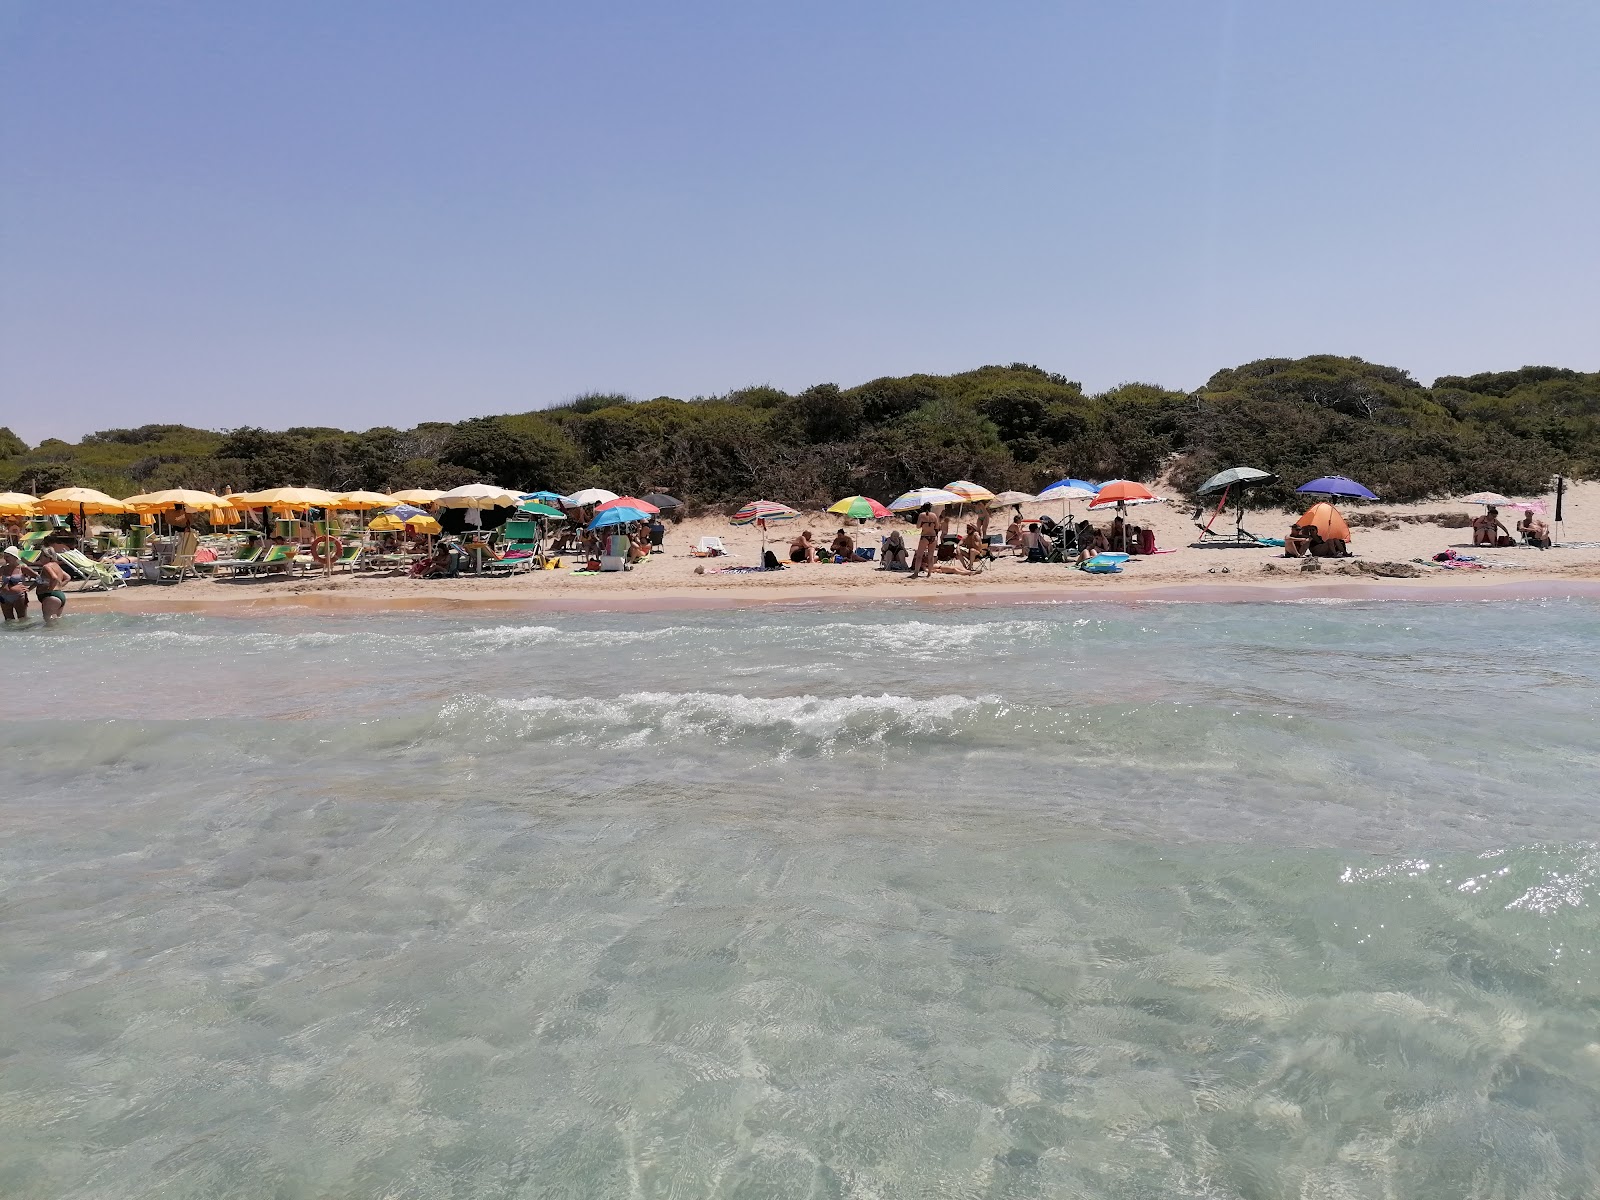 Foto av Spiaggia Padula Bianca med hög nivå av renlighet